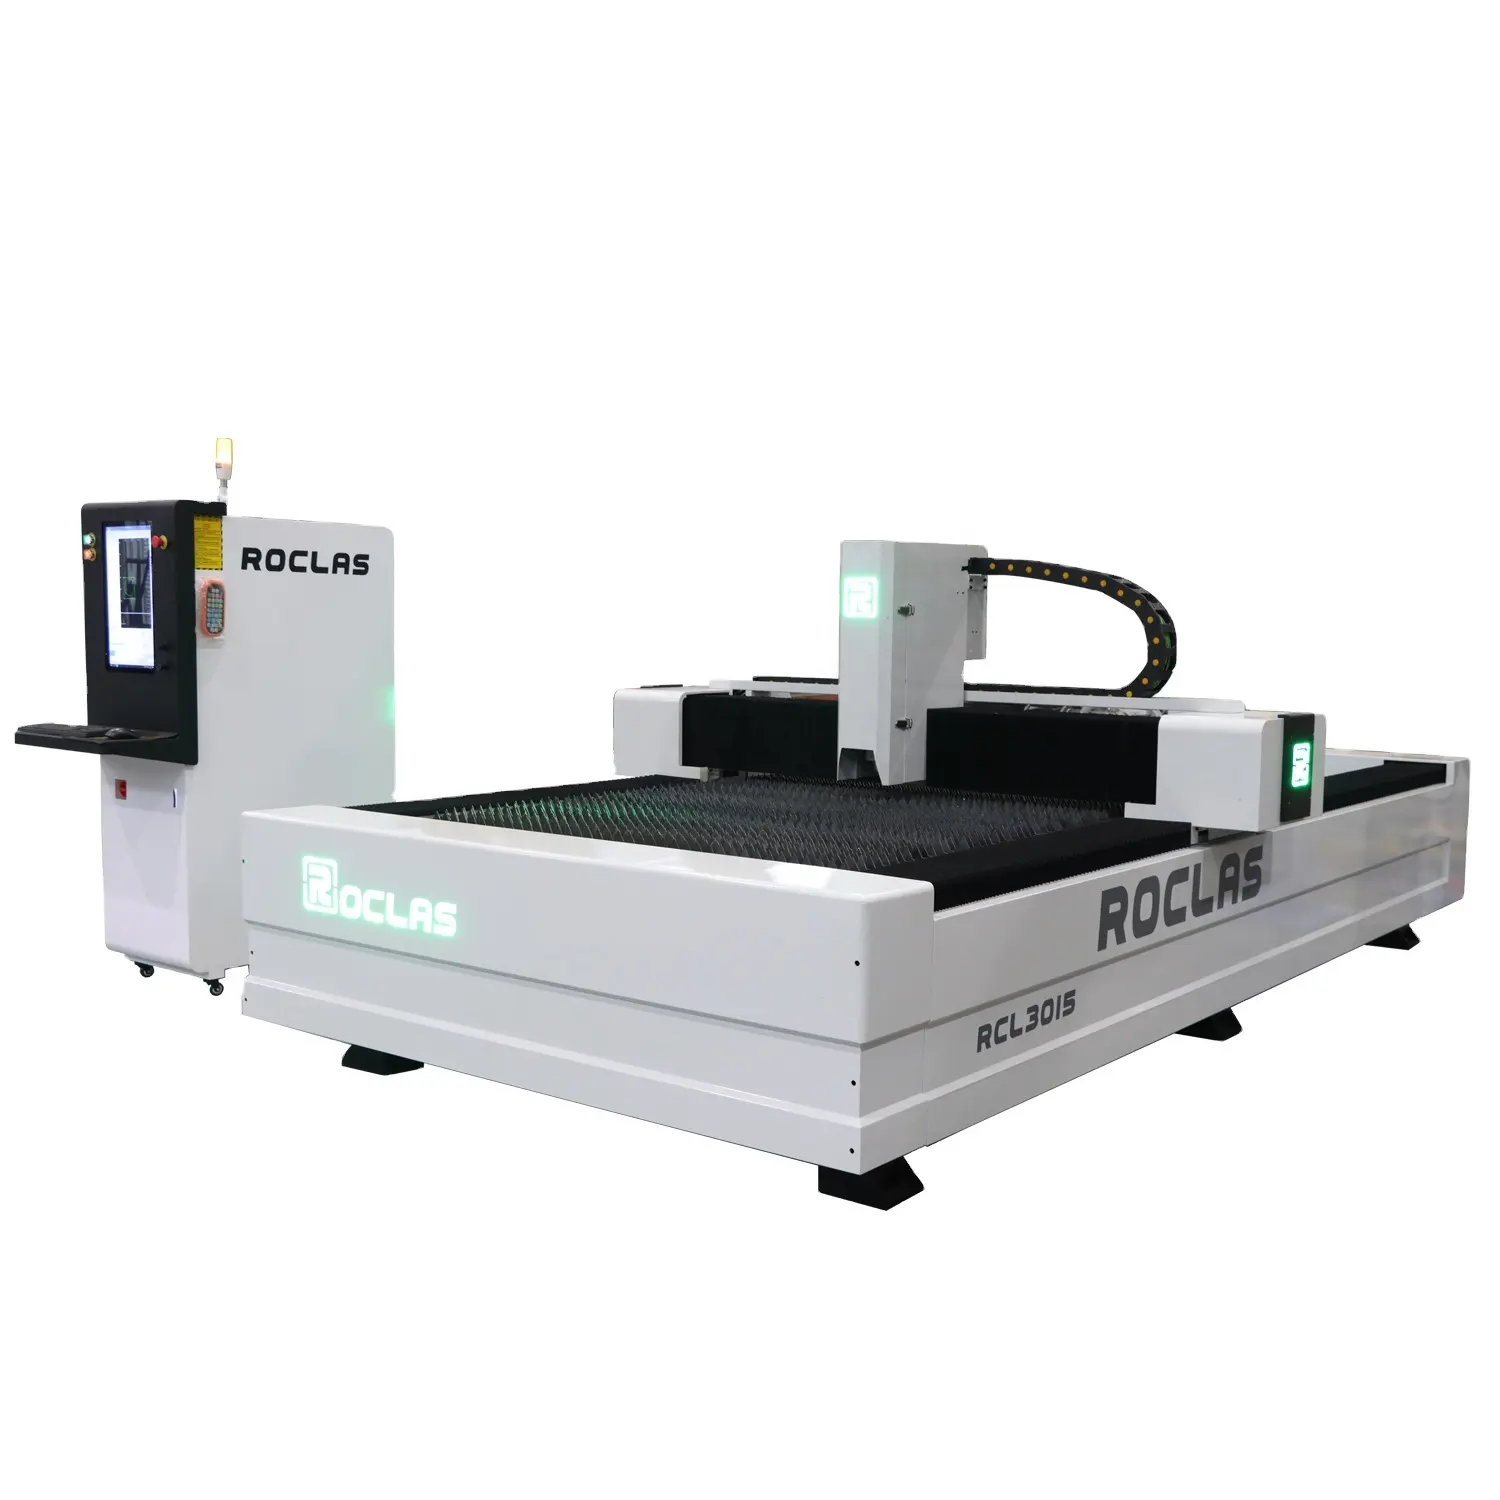 High Speed ROCLAS3015 CNC Fiber Laser Cutting Machine for sheet metals carbon steel stainless steel furniture door robots